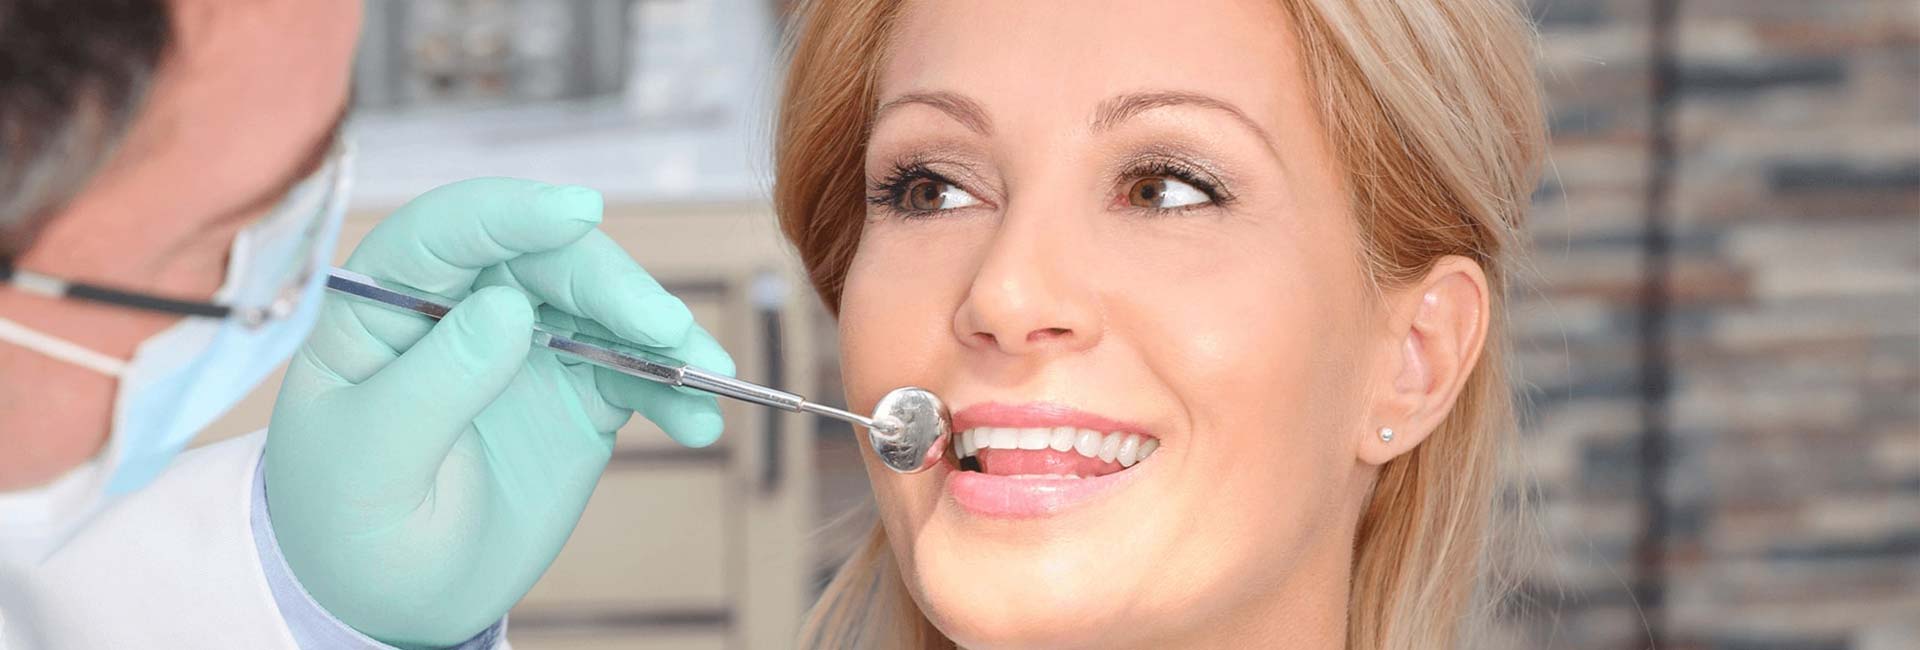 Dentist examing a women's teeth